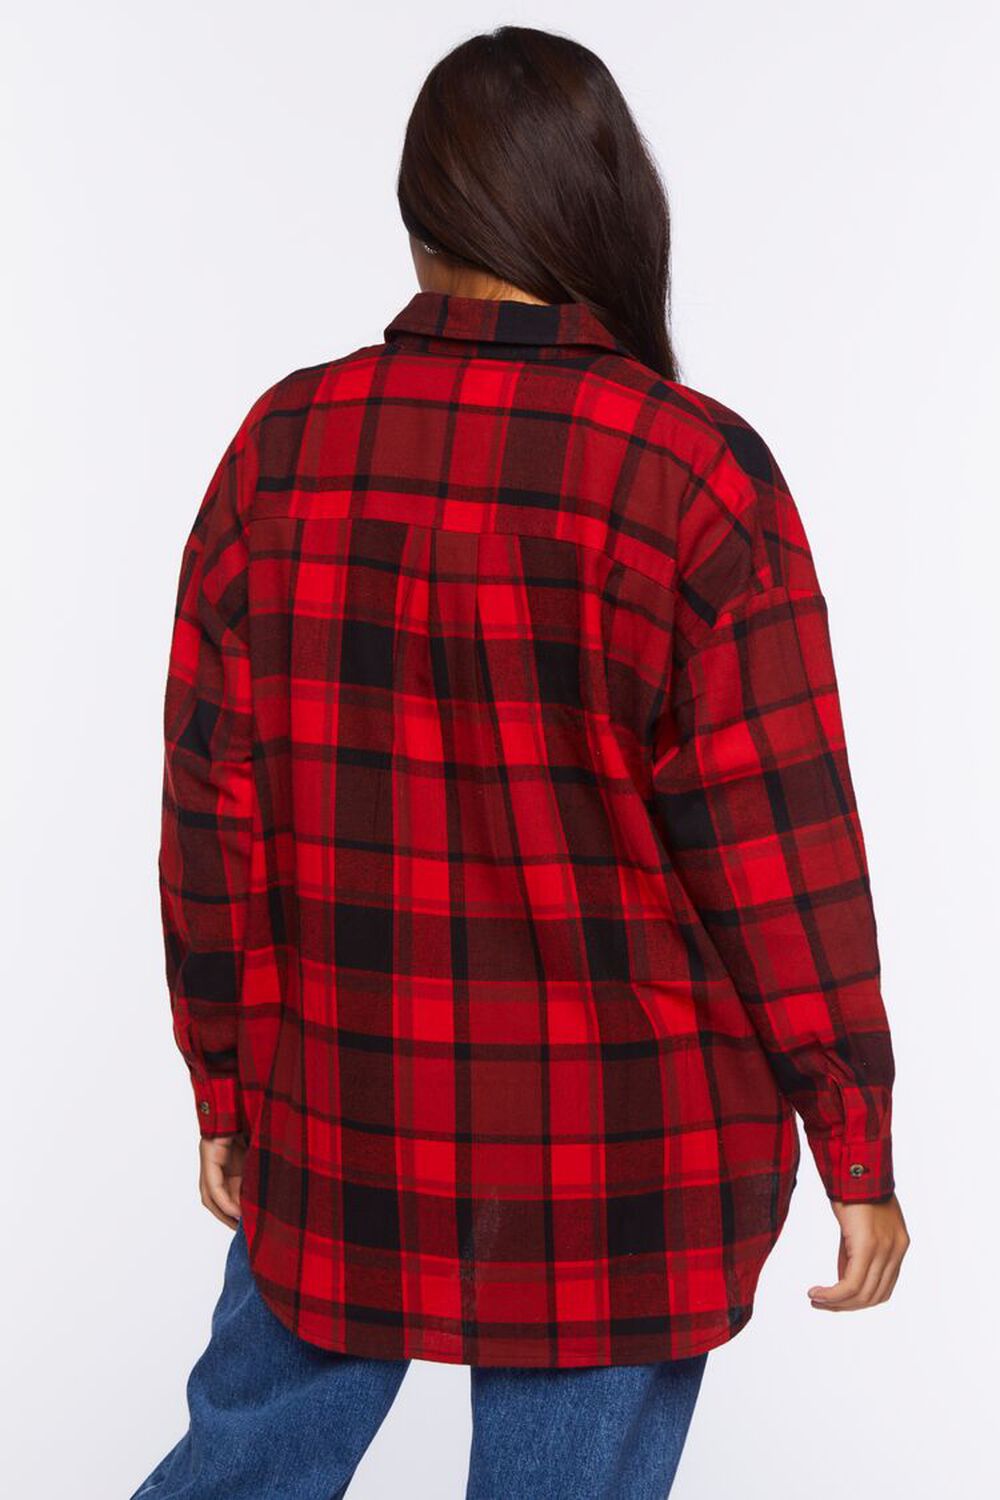 RED/MULTI Plaid Flannel Shirt, image 3